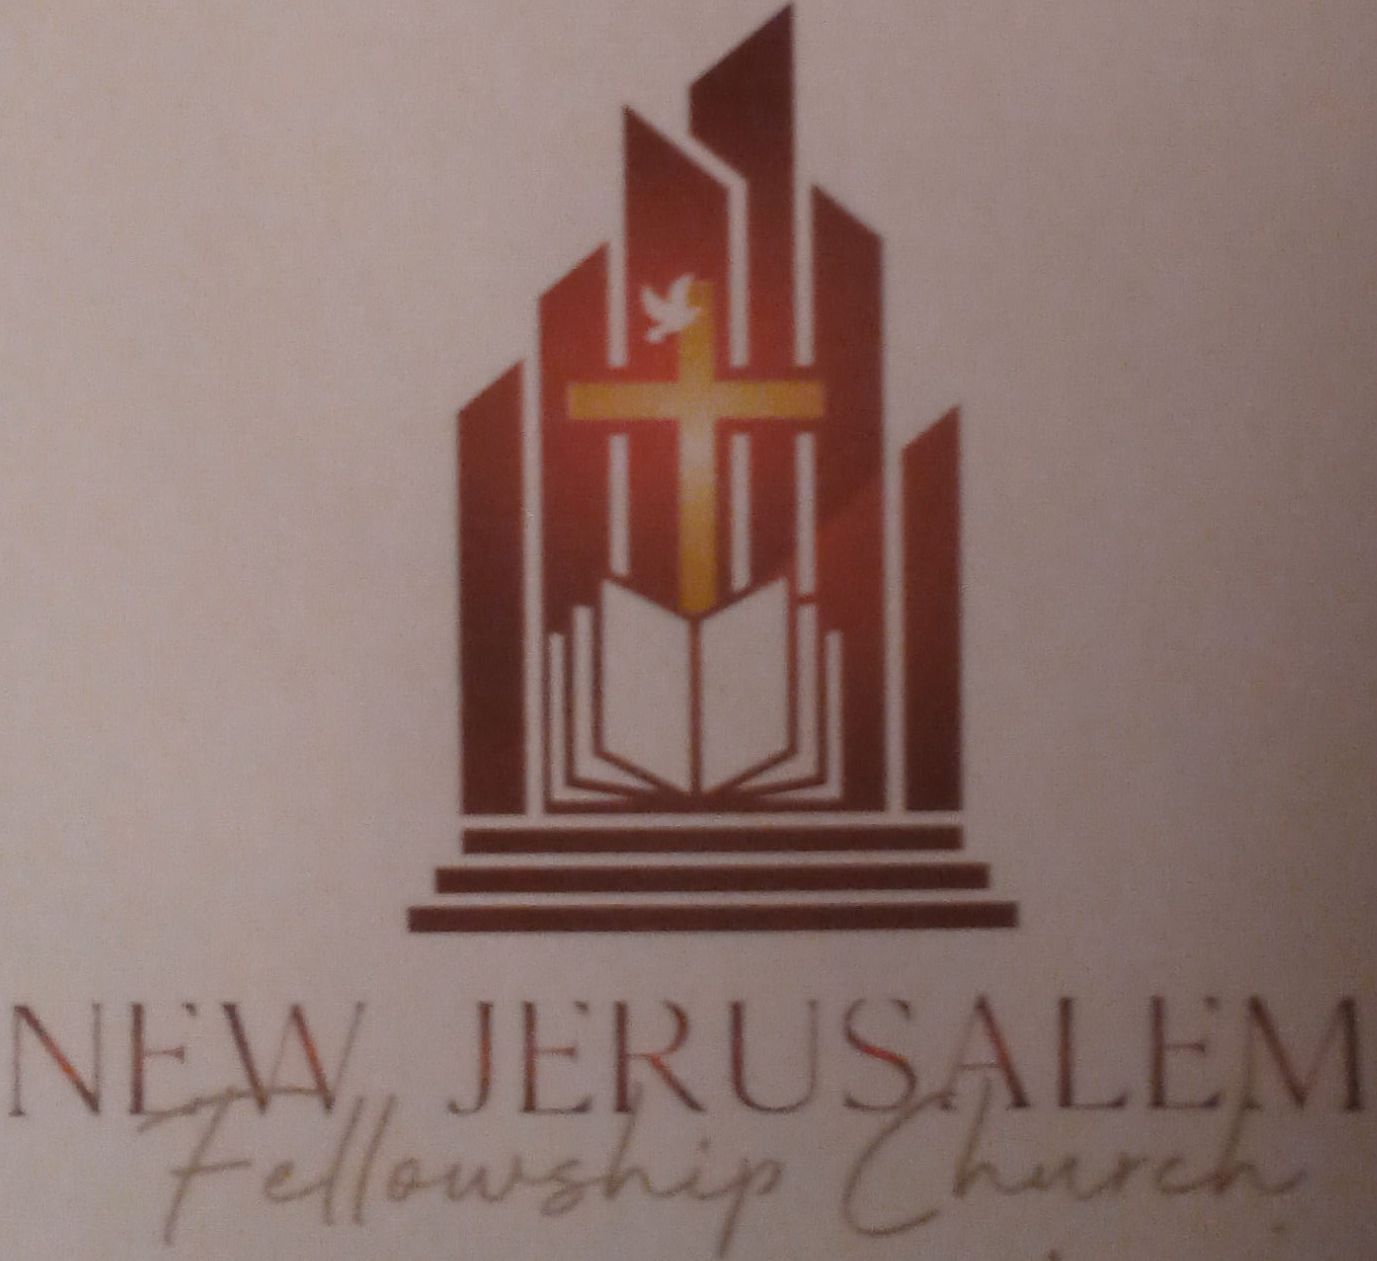 New Jerusalem Fellowship